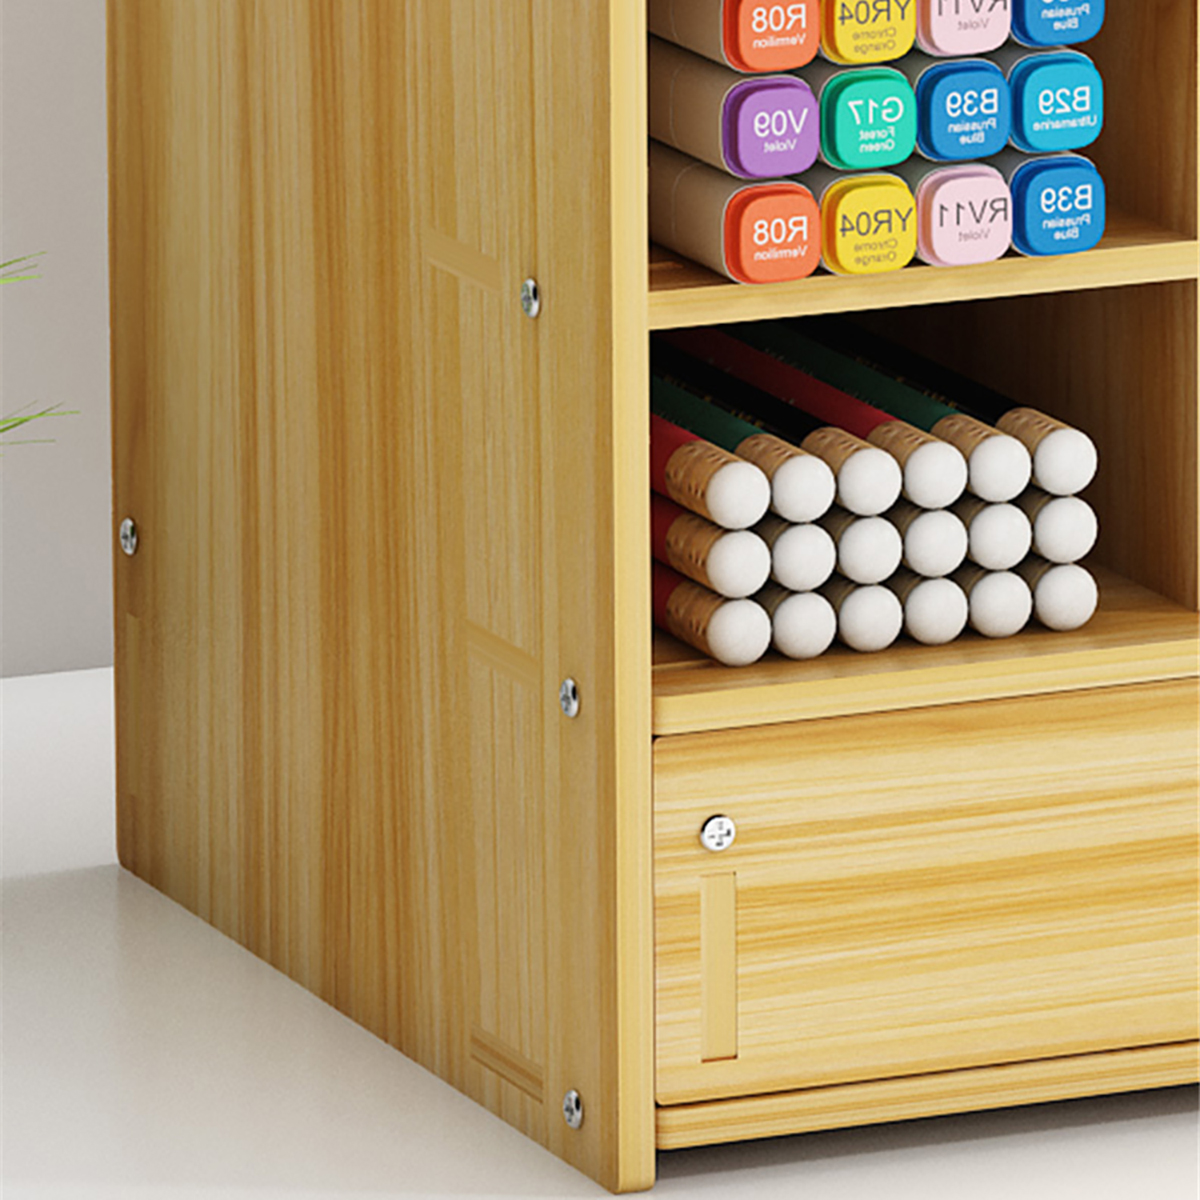 Pen-Holder-Wooden-Pencil-Storage-Holder-Study-Home-Office-Case-Rack-Drawer-1829251-8